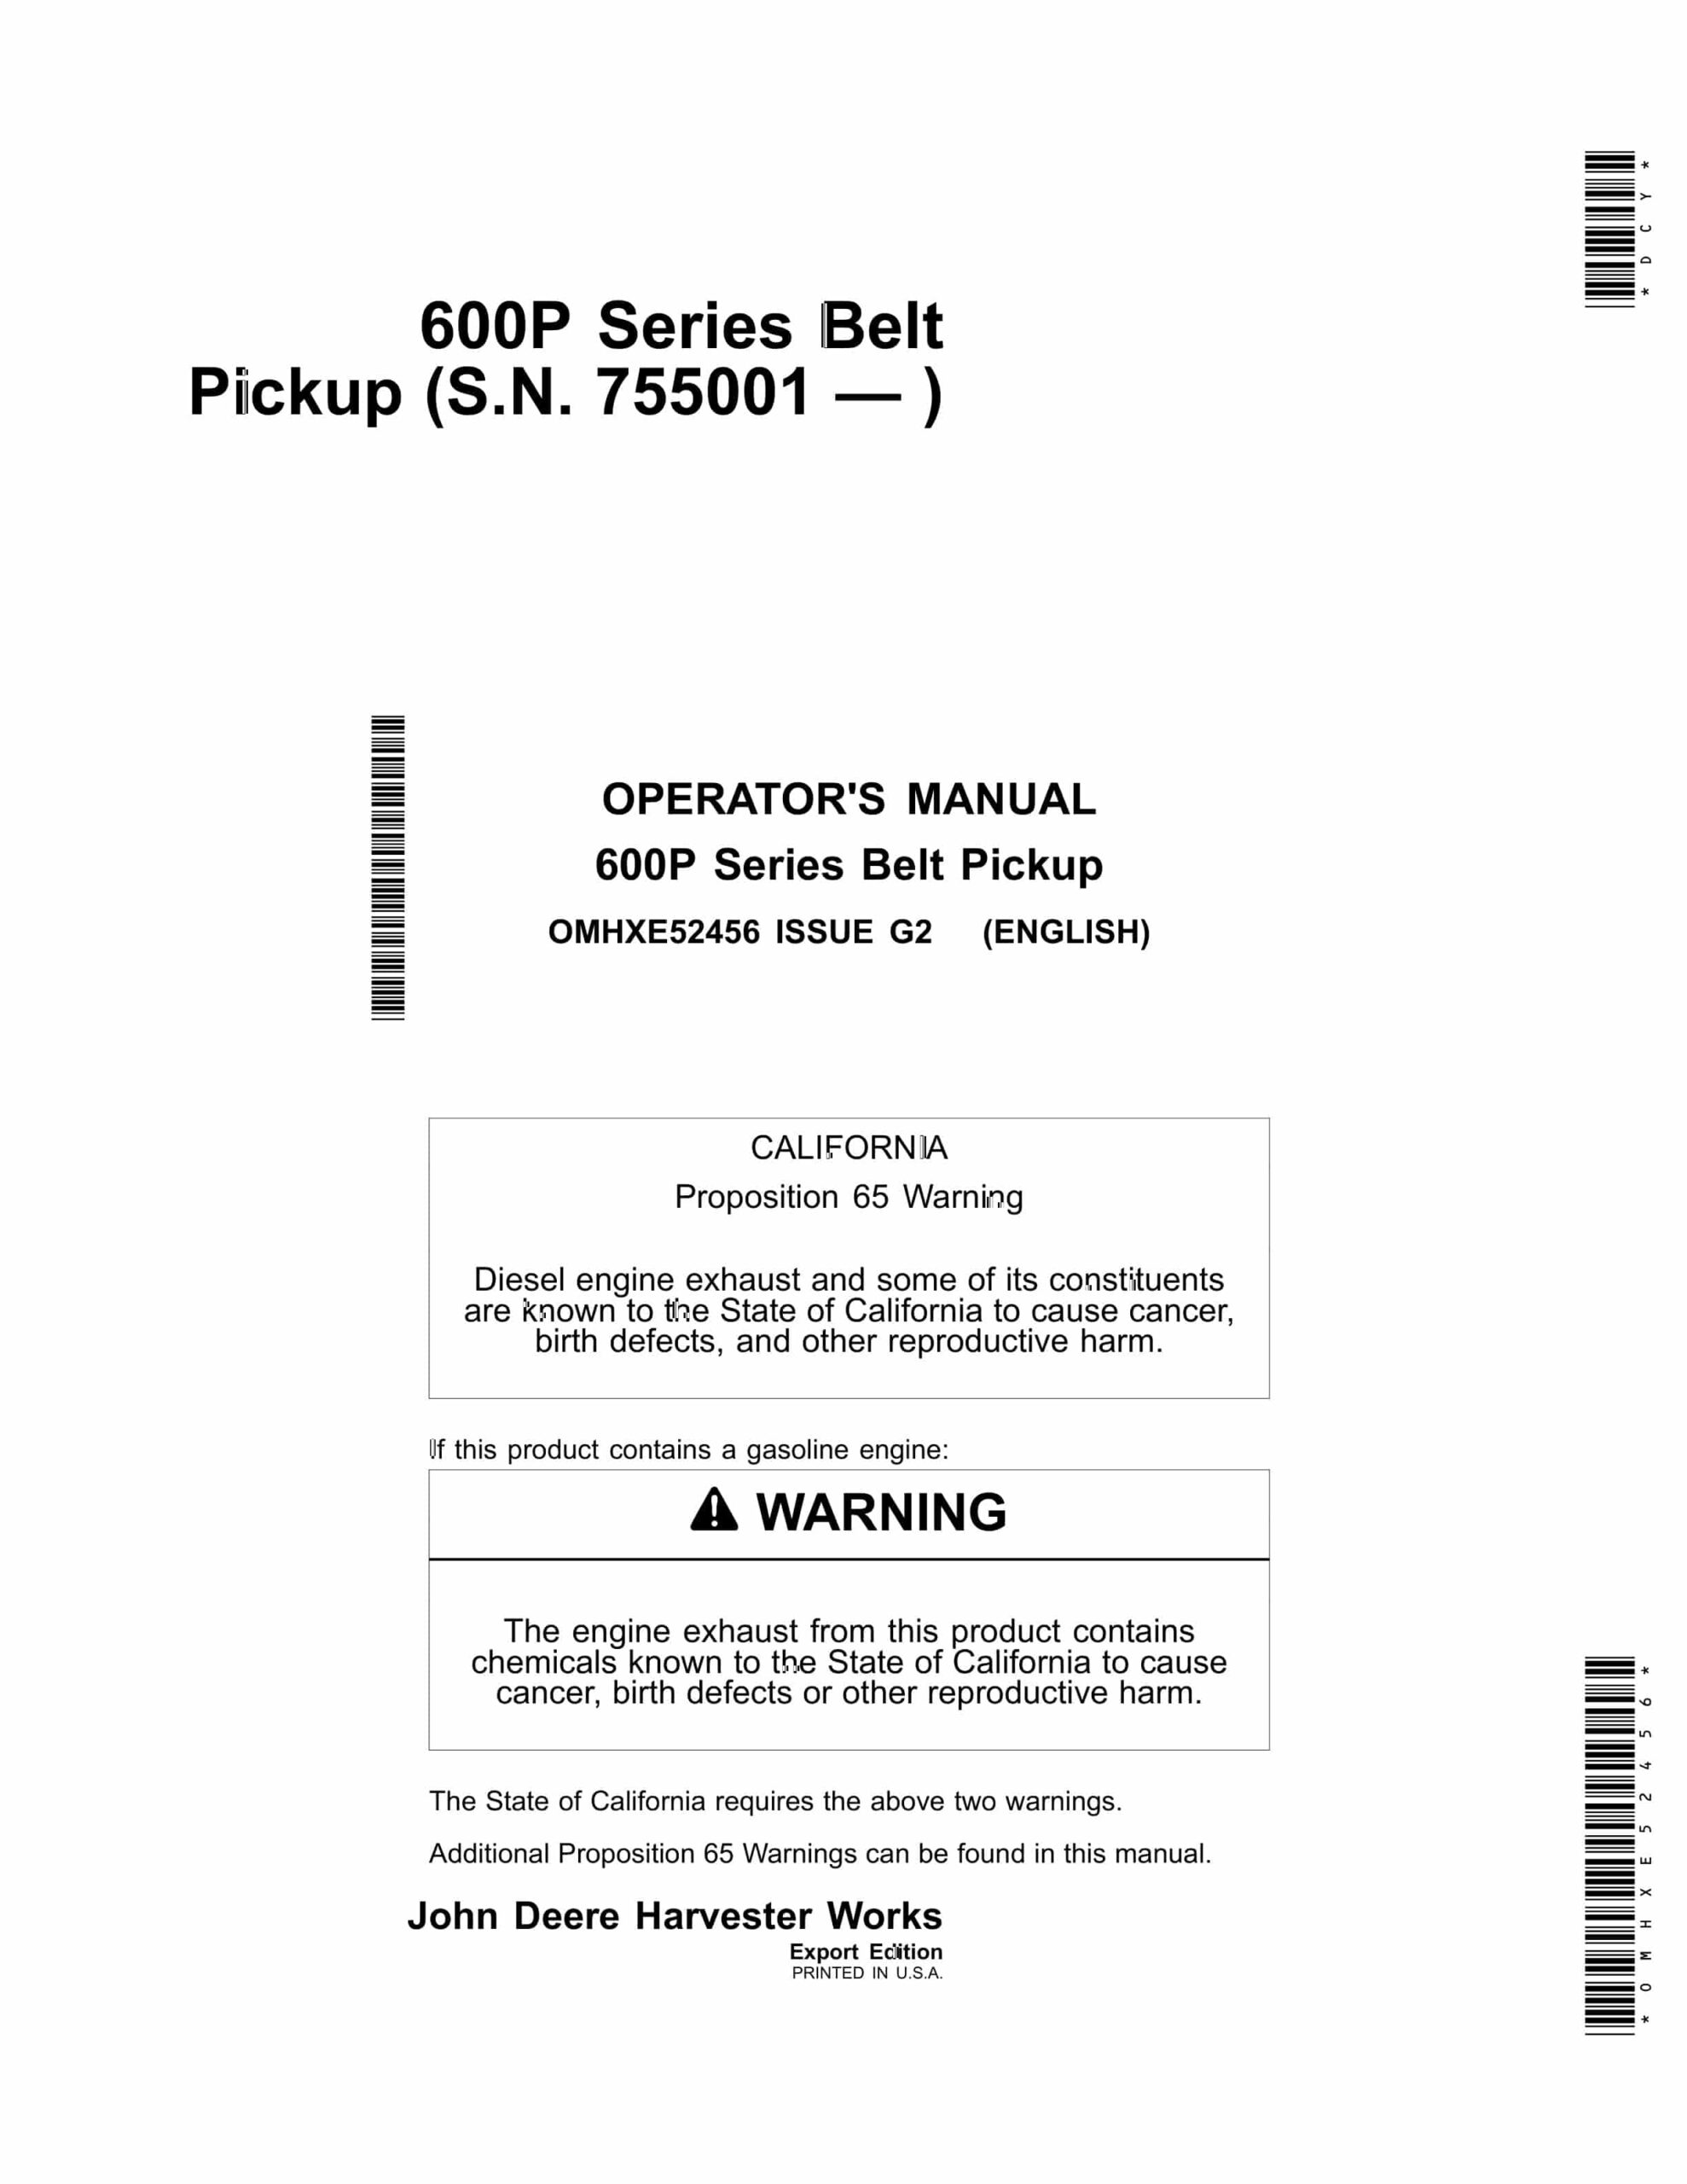 John Deere 600P Series Belt Pickup Operator Manual OMHXE52456-1